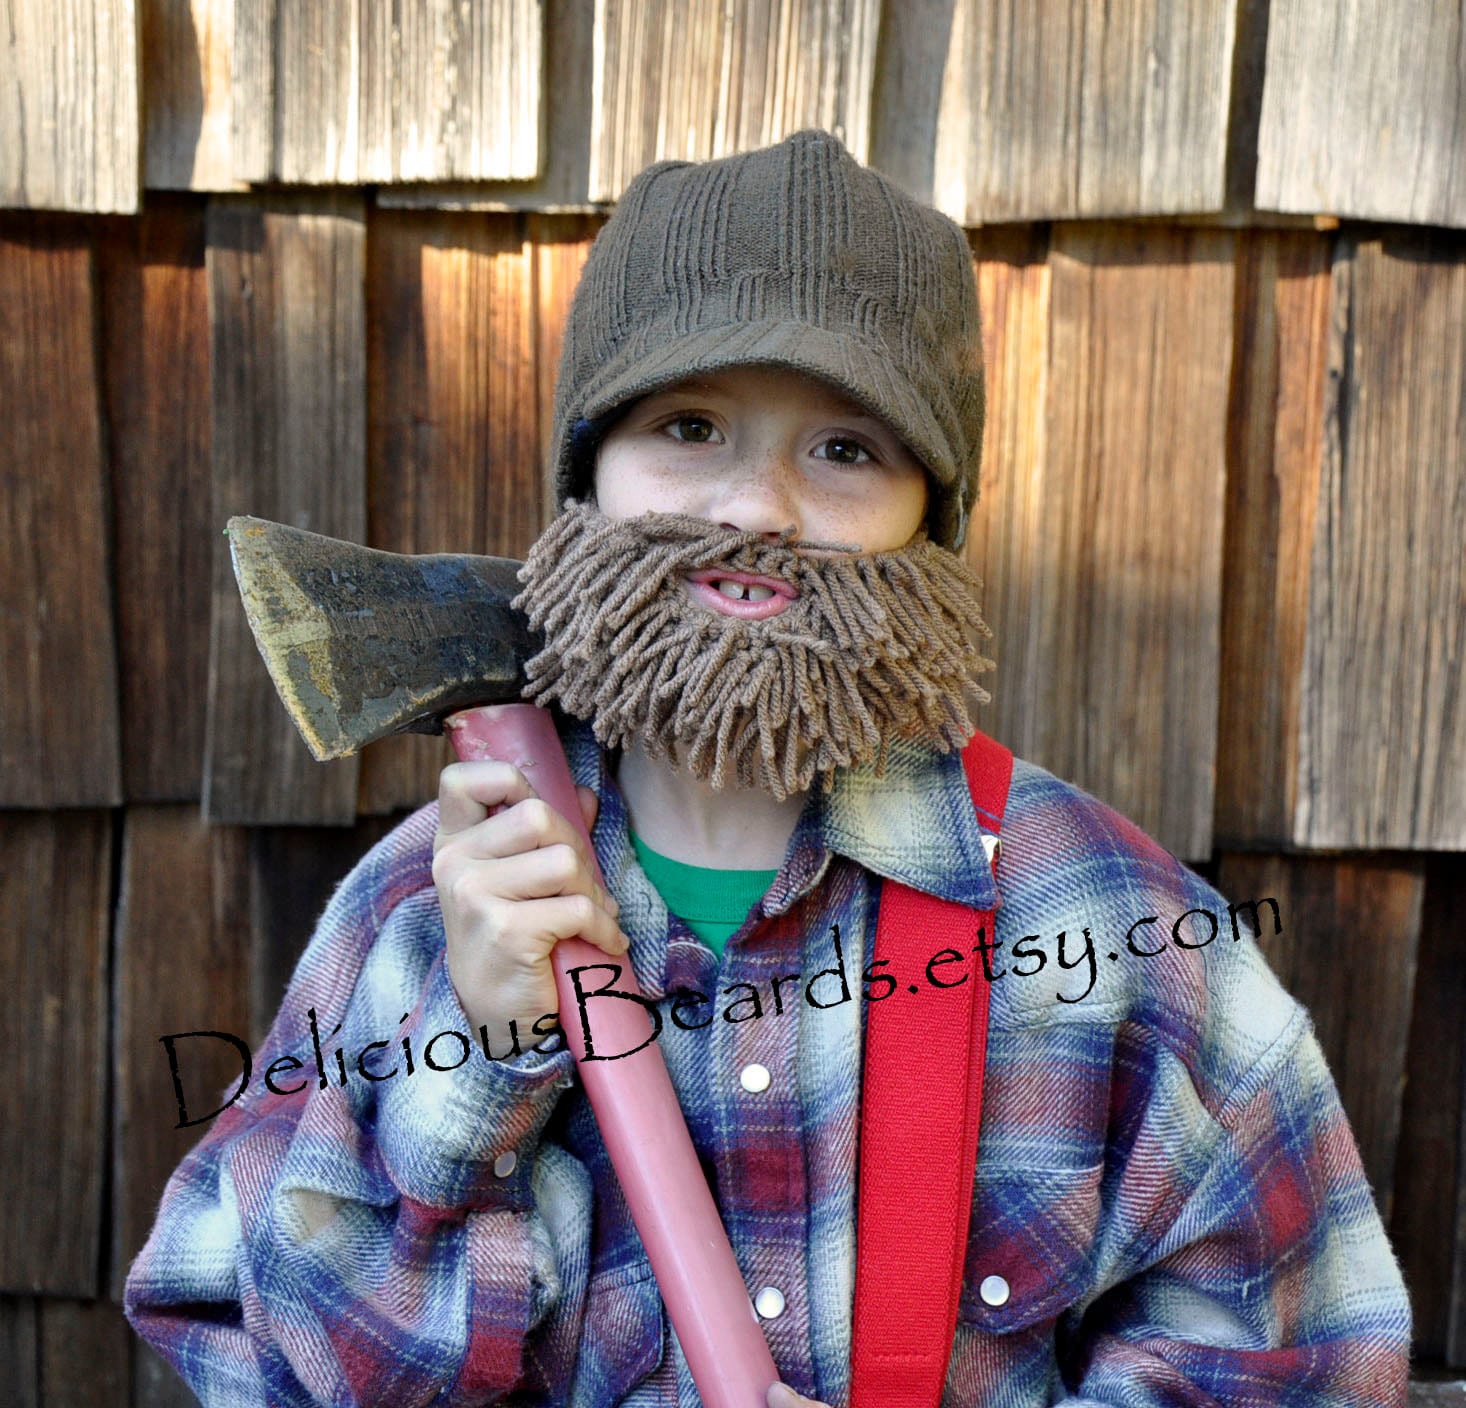 Wholesale Artificial Wool Gnome Beard Costume Beard 